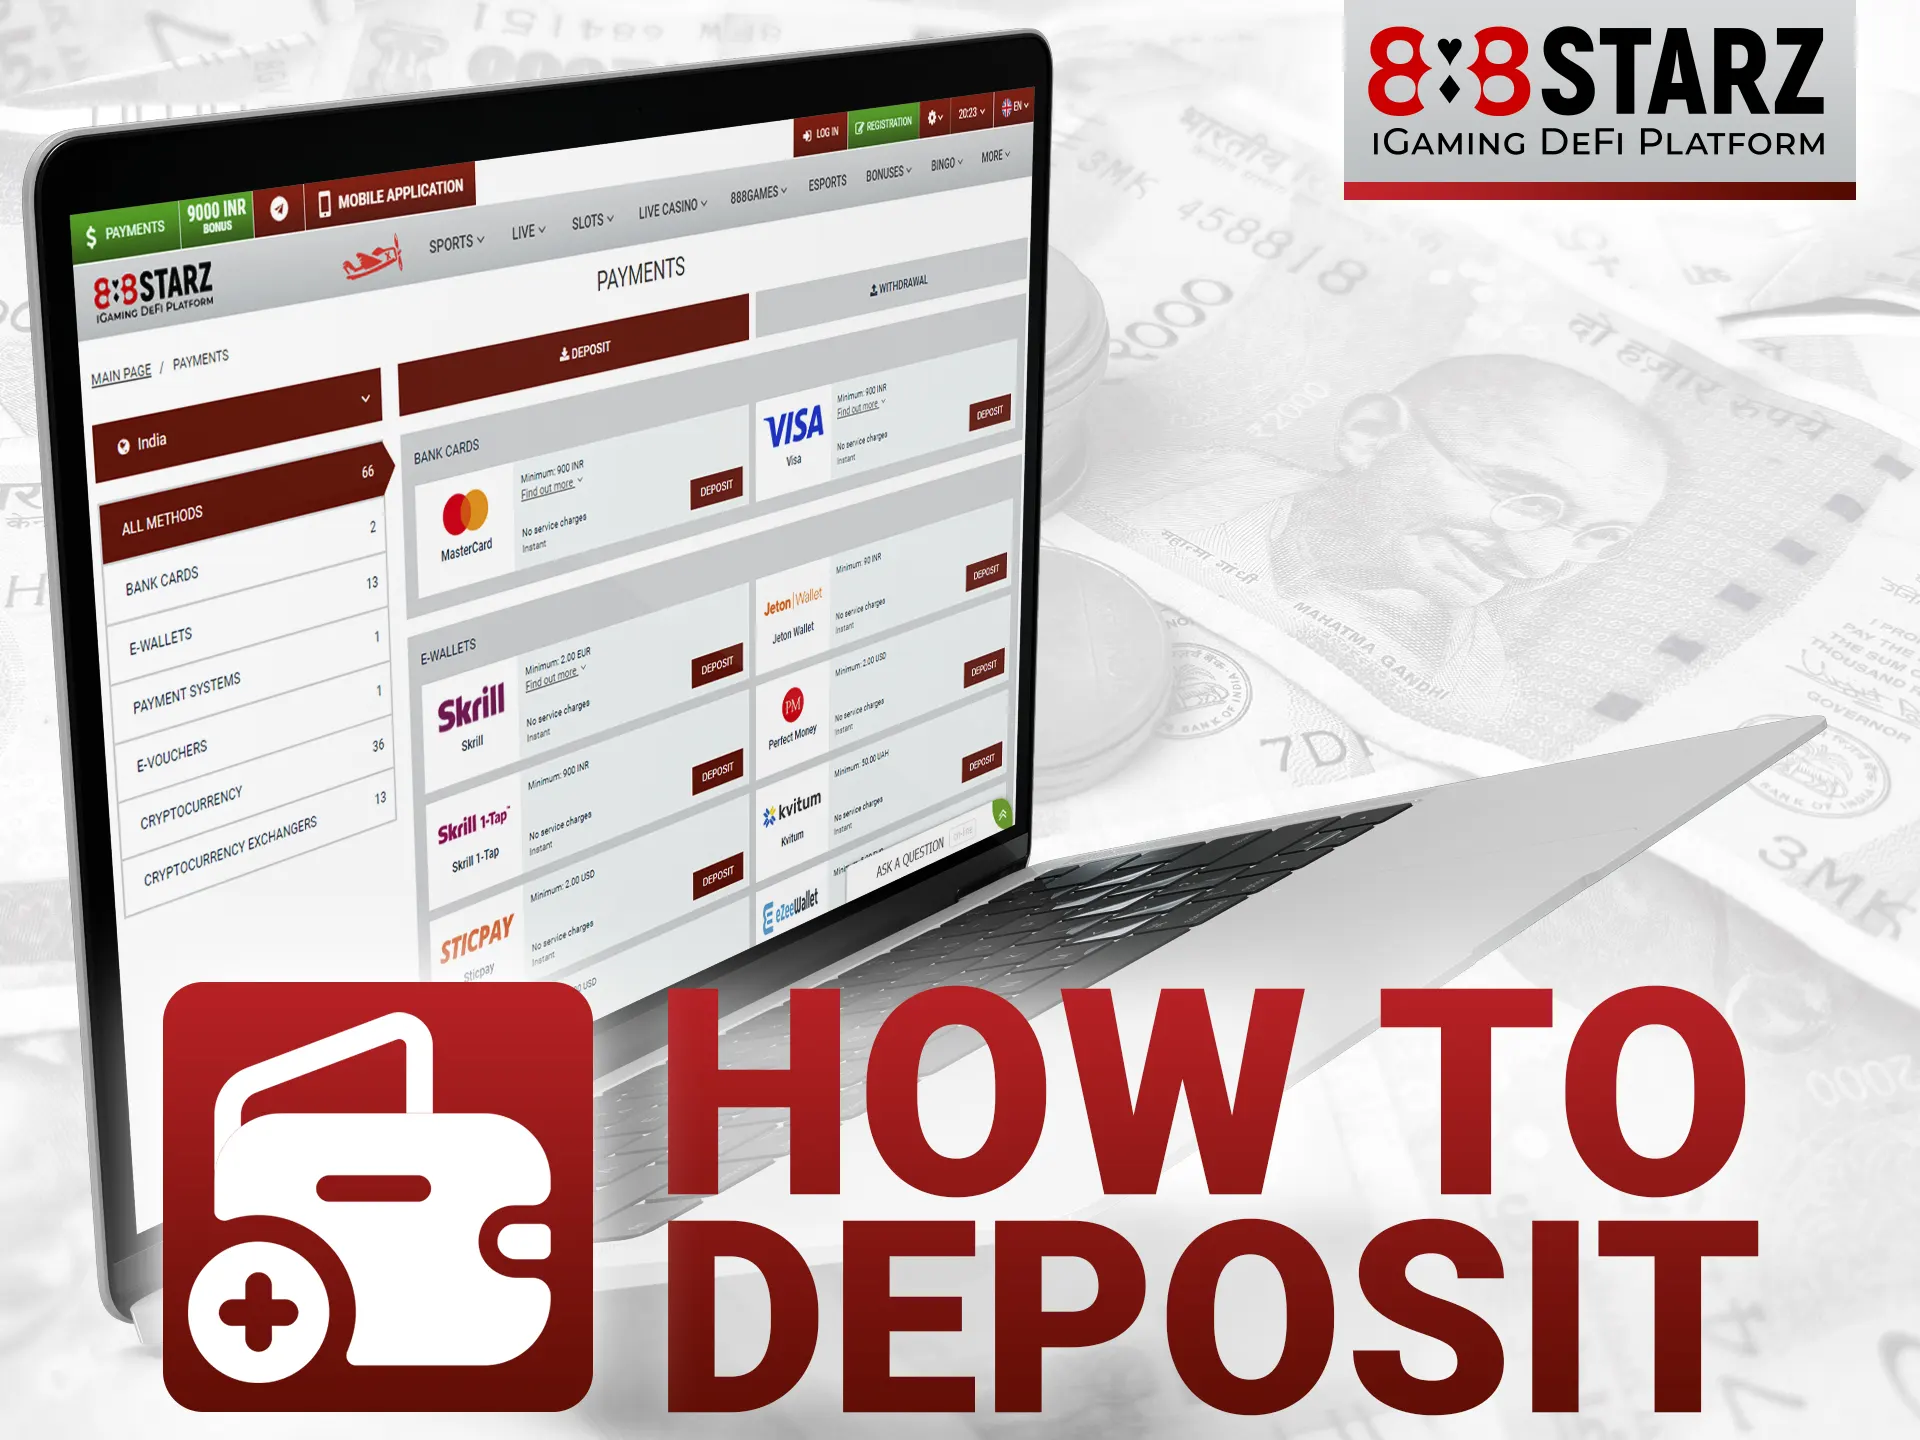 Follow the steps below to make a deposit.